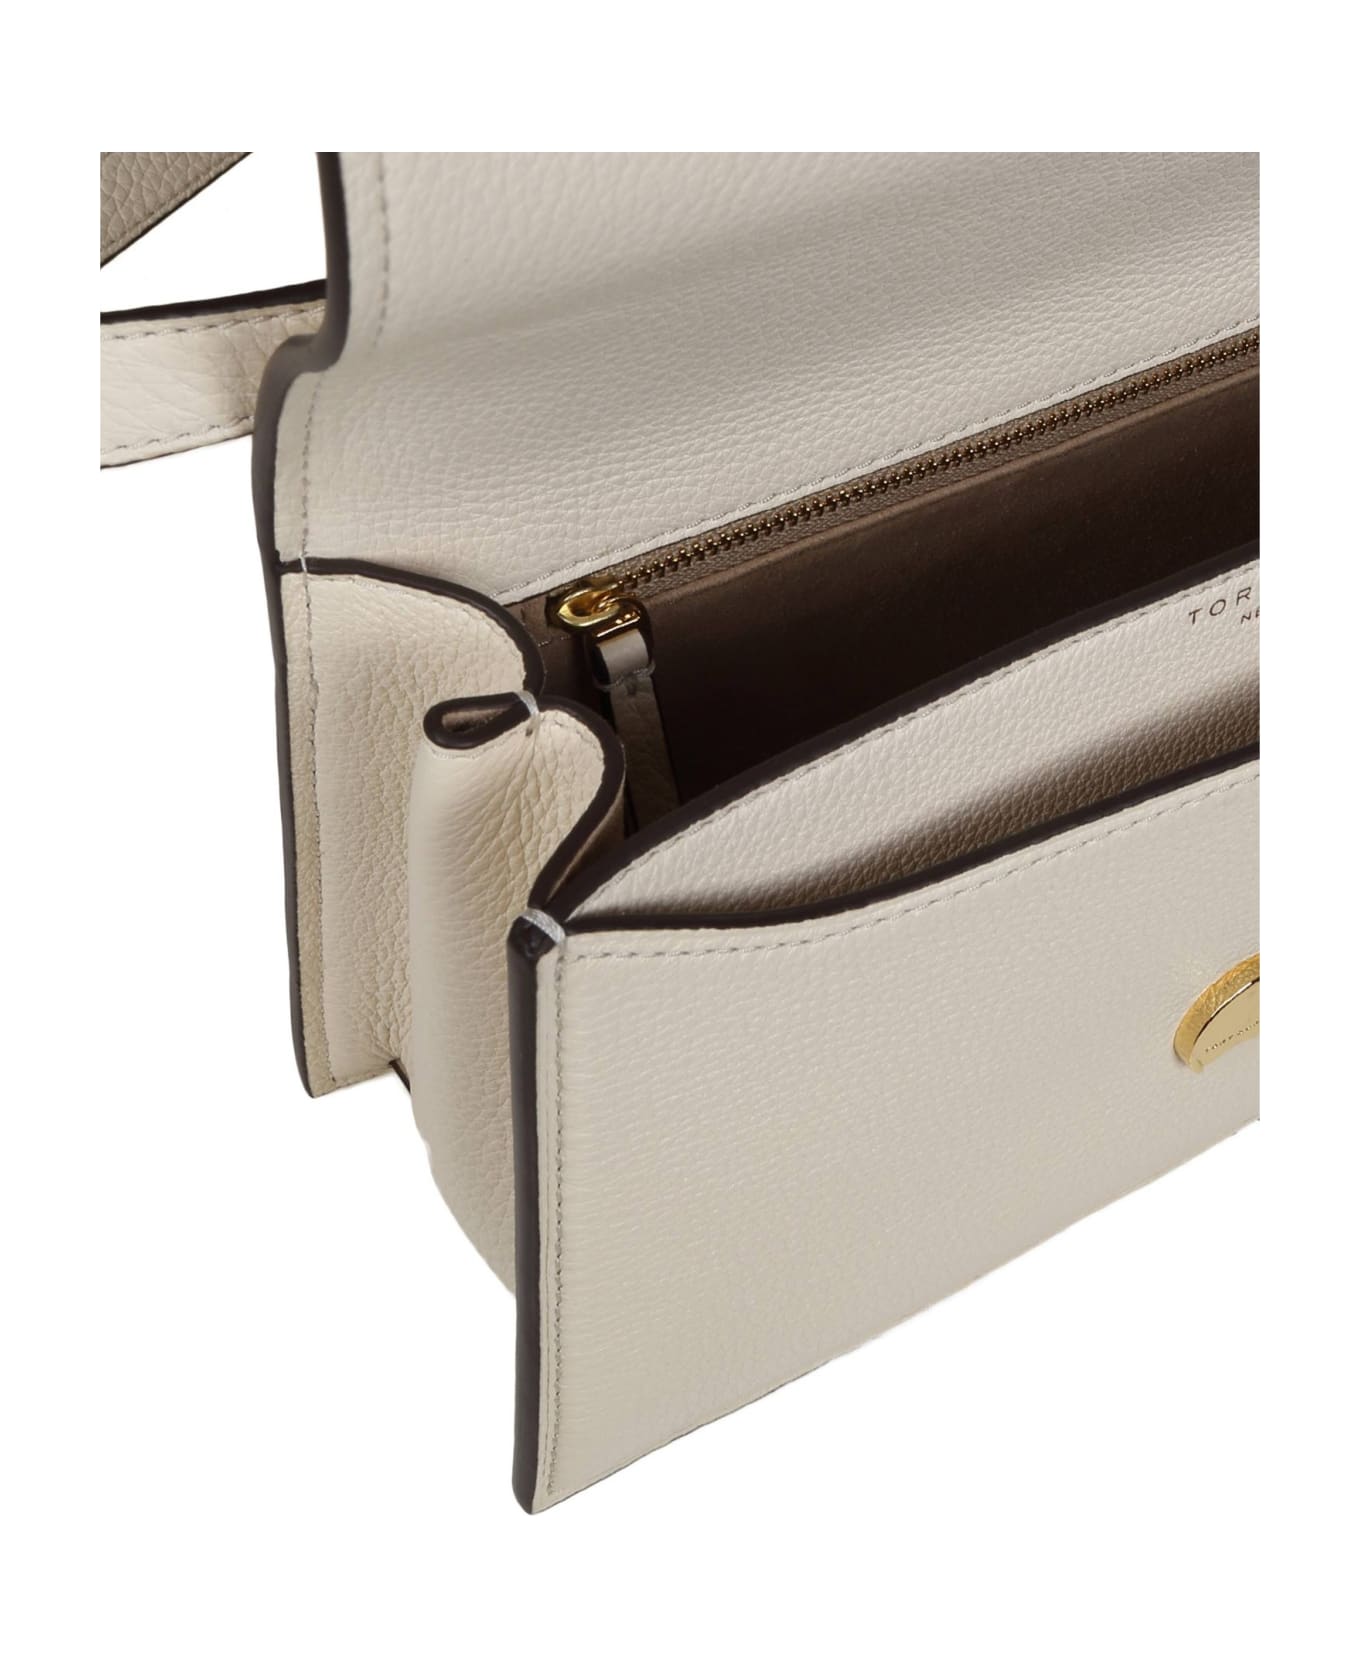 Tory Burch Miller Shoulder Bag In Cream Color Leather - Cream